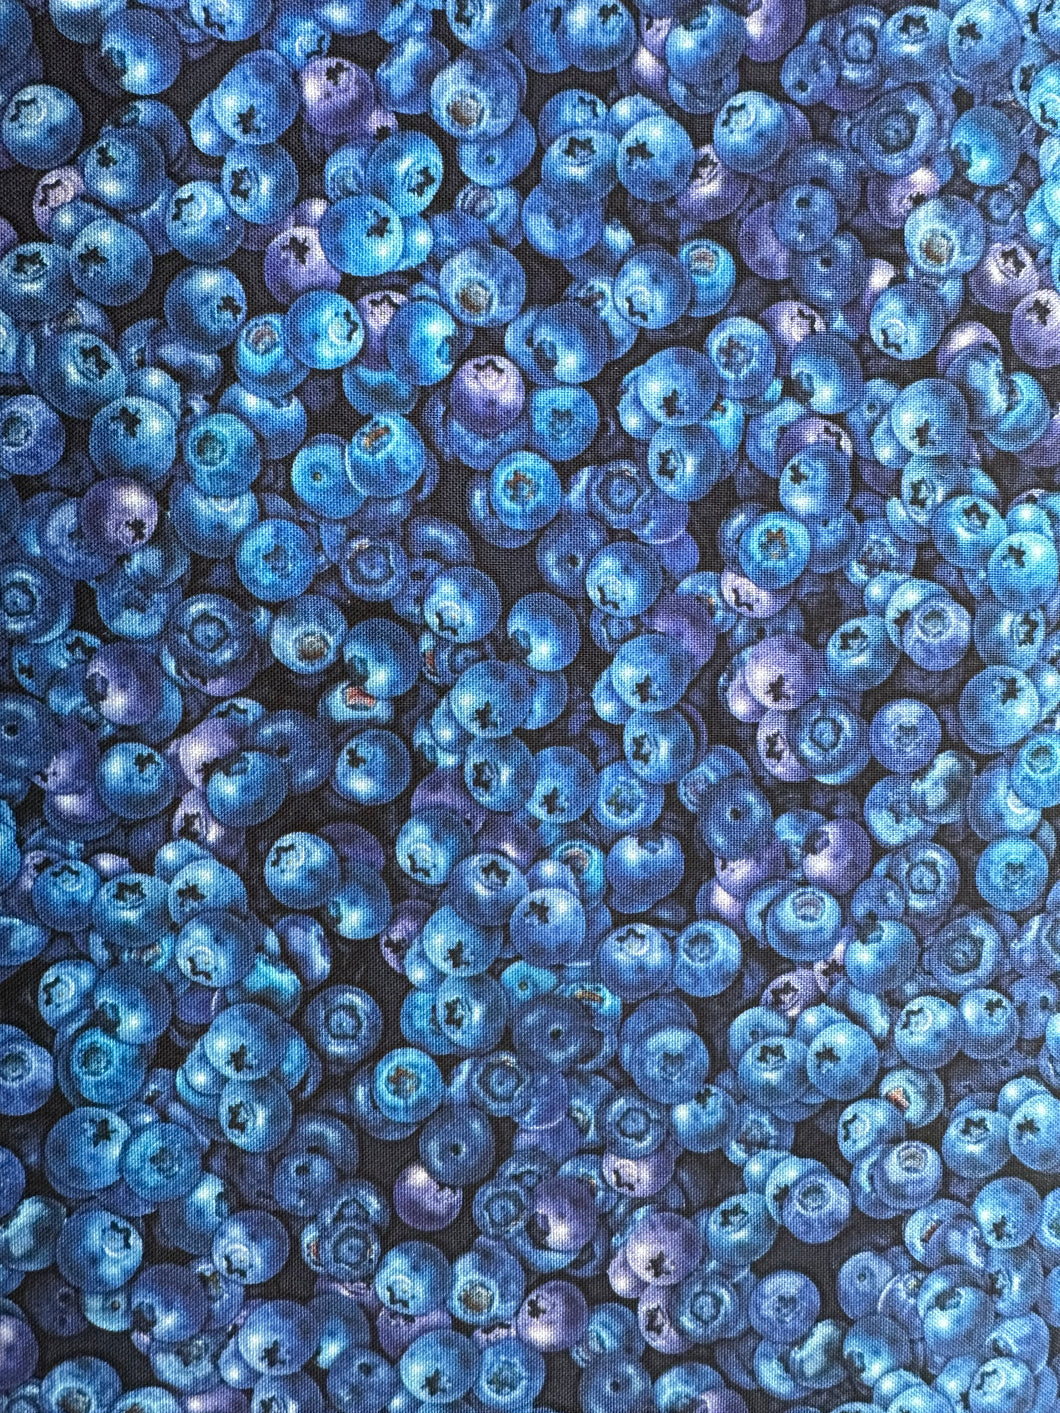 Quilting Cotton  - blueberries - 1/2 meter